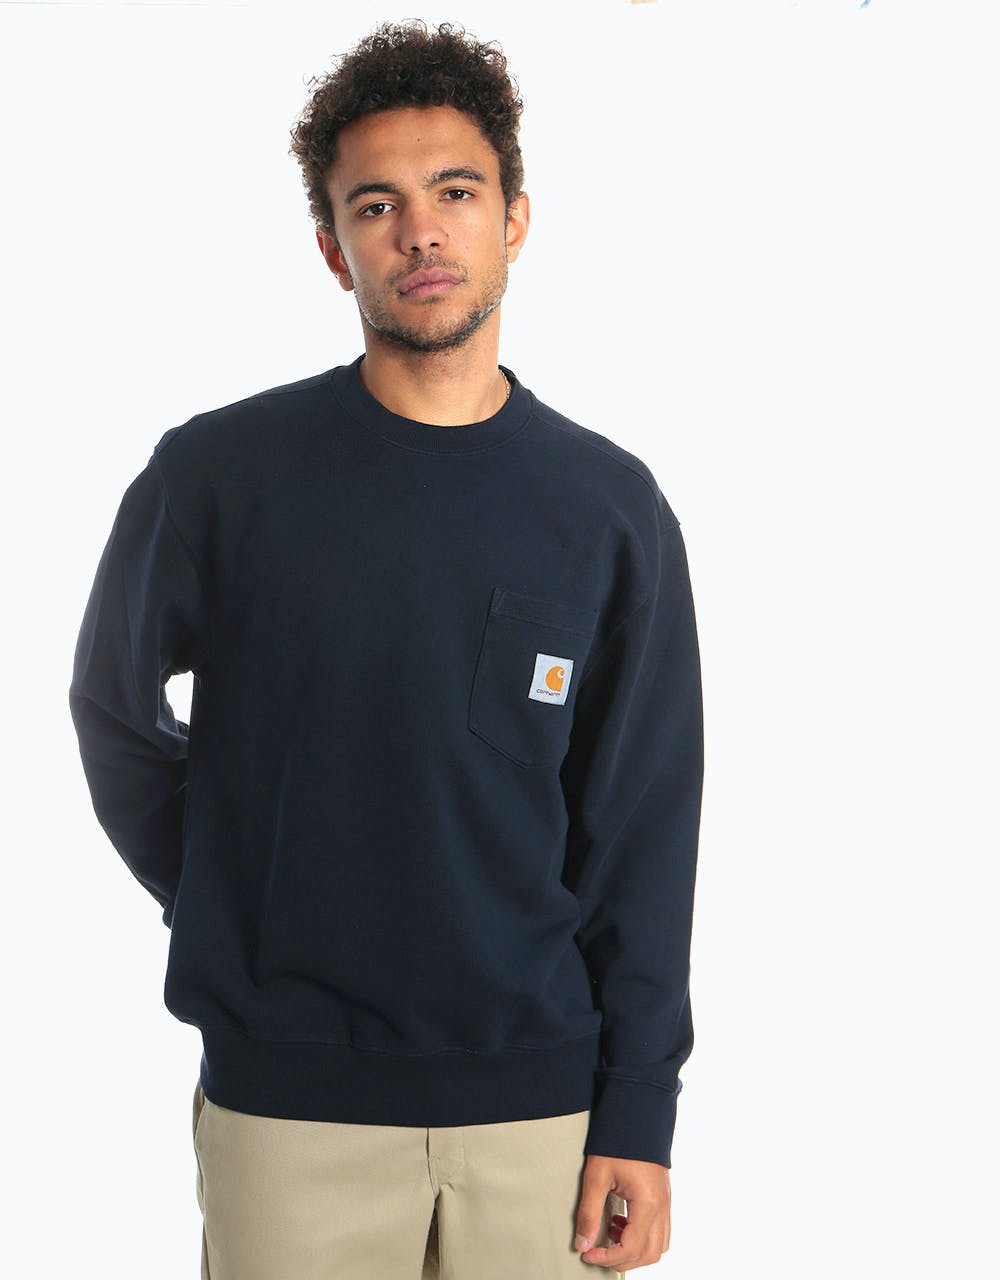 Carhartt WIP Pocket Sweatshirt - Dark Navy